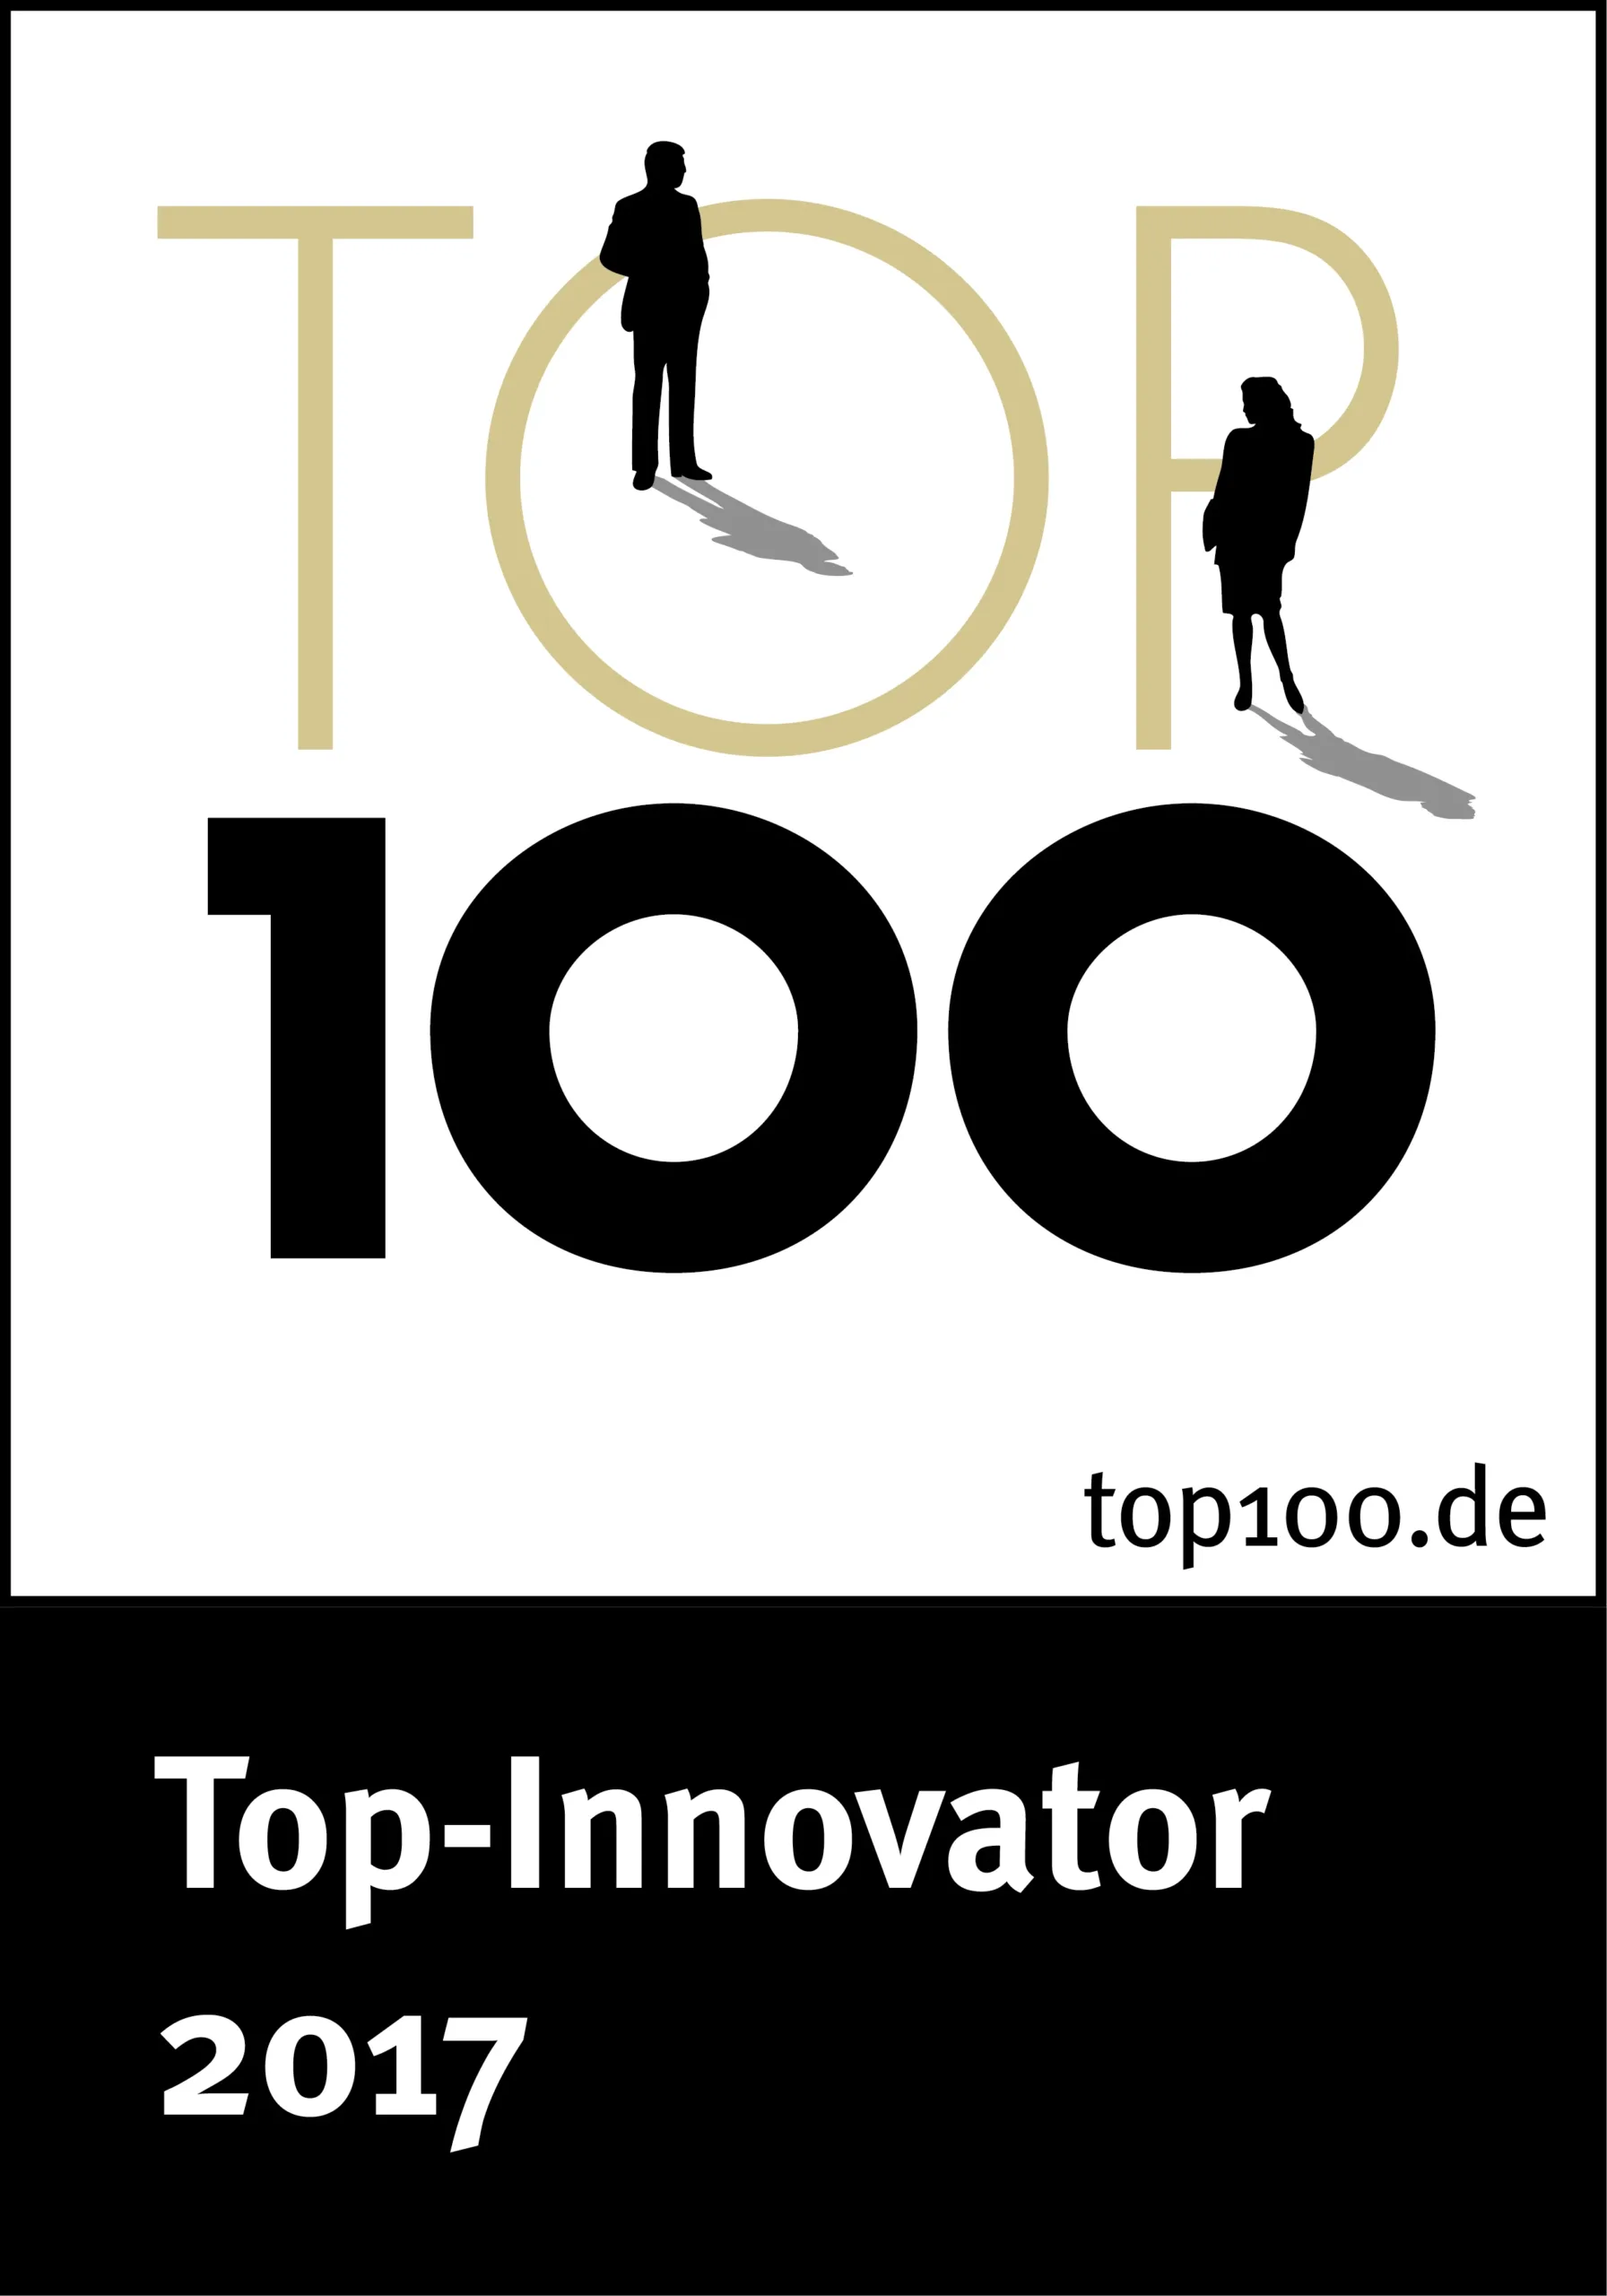 Top-Innovator 2017